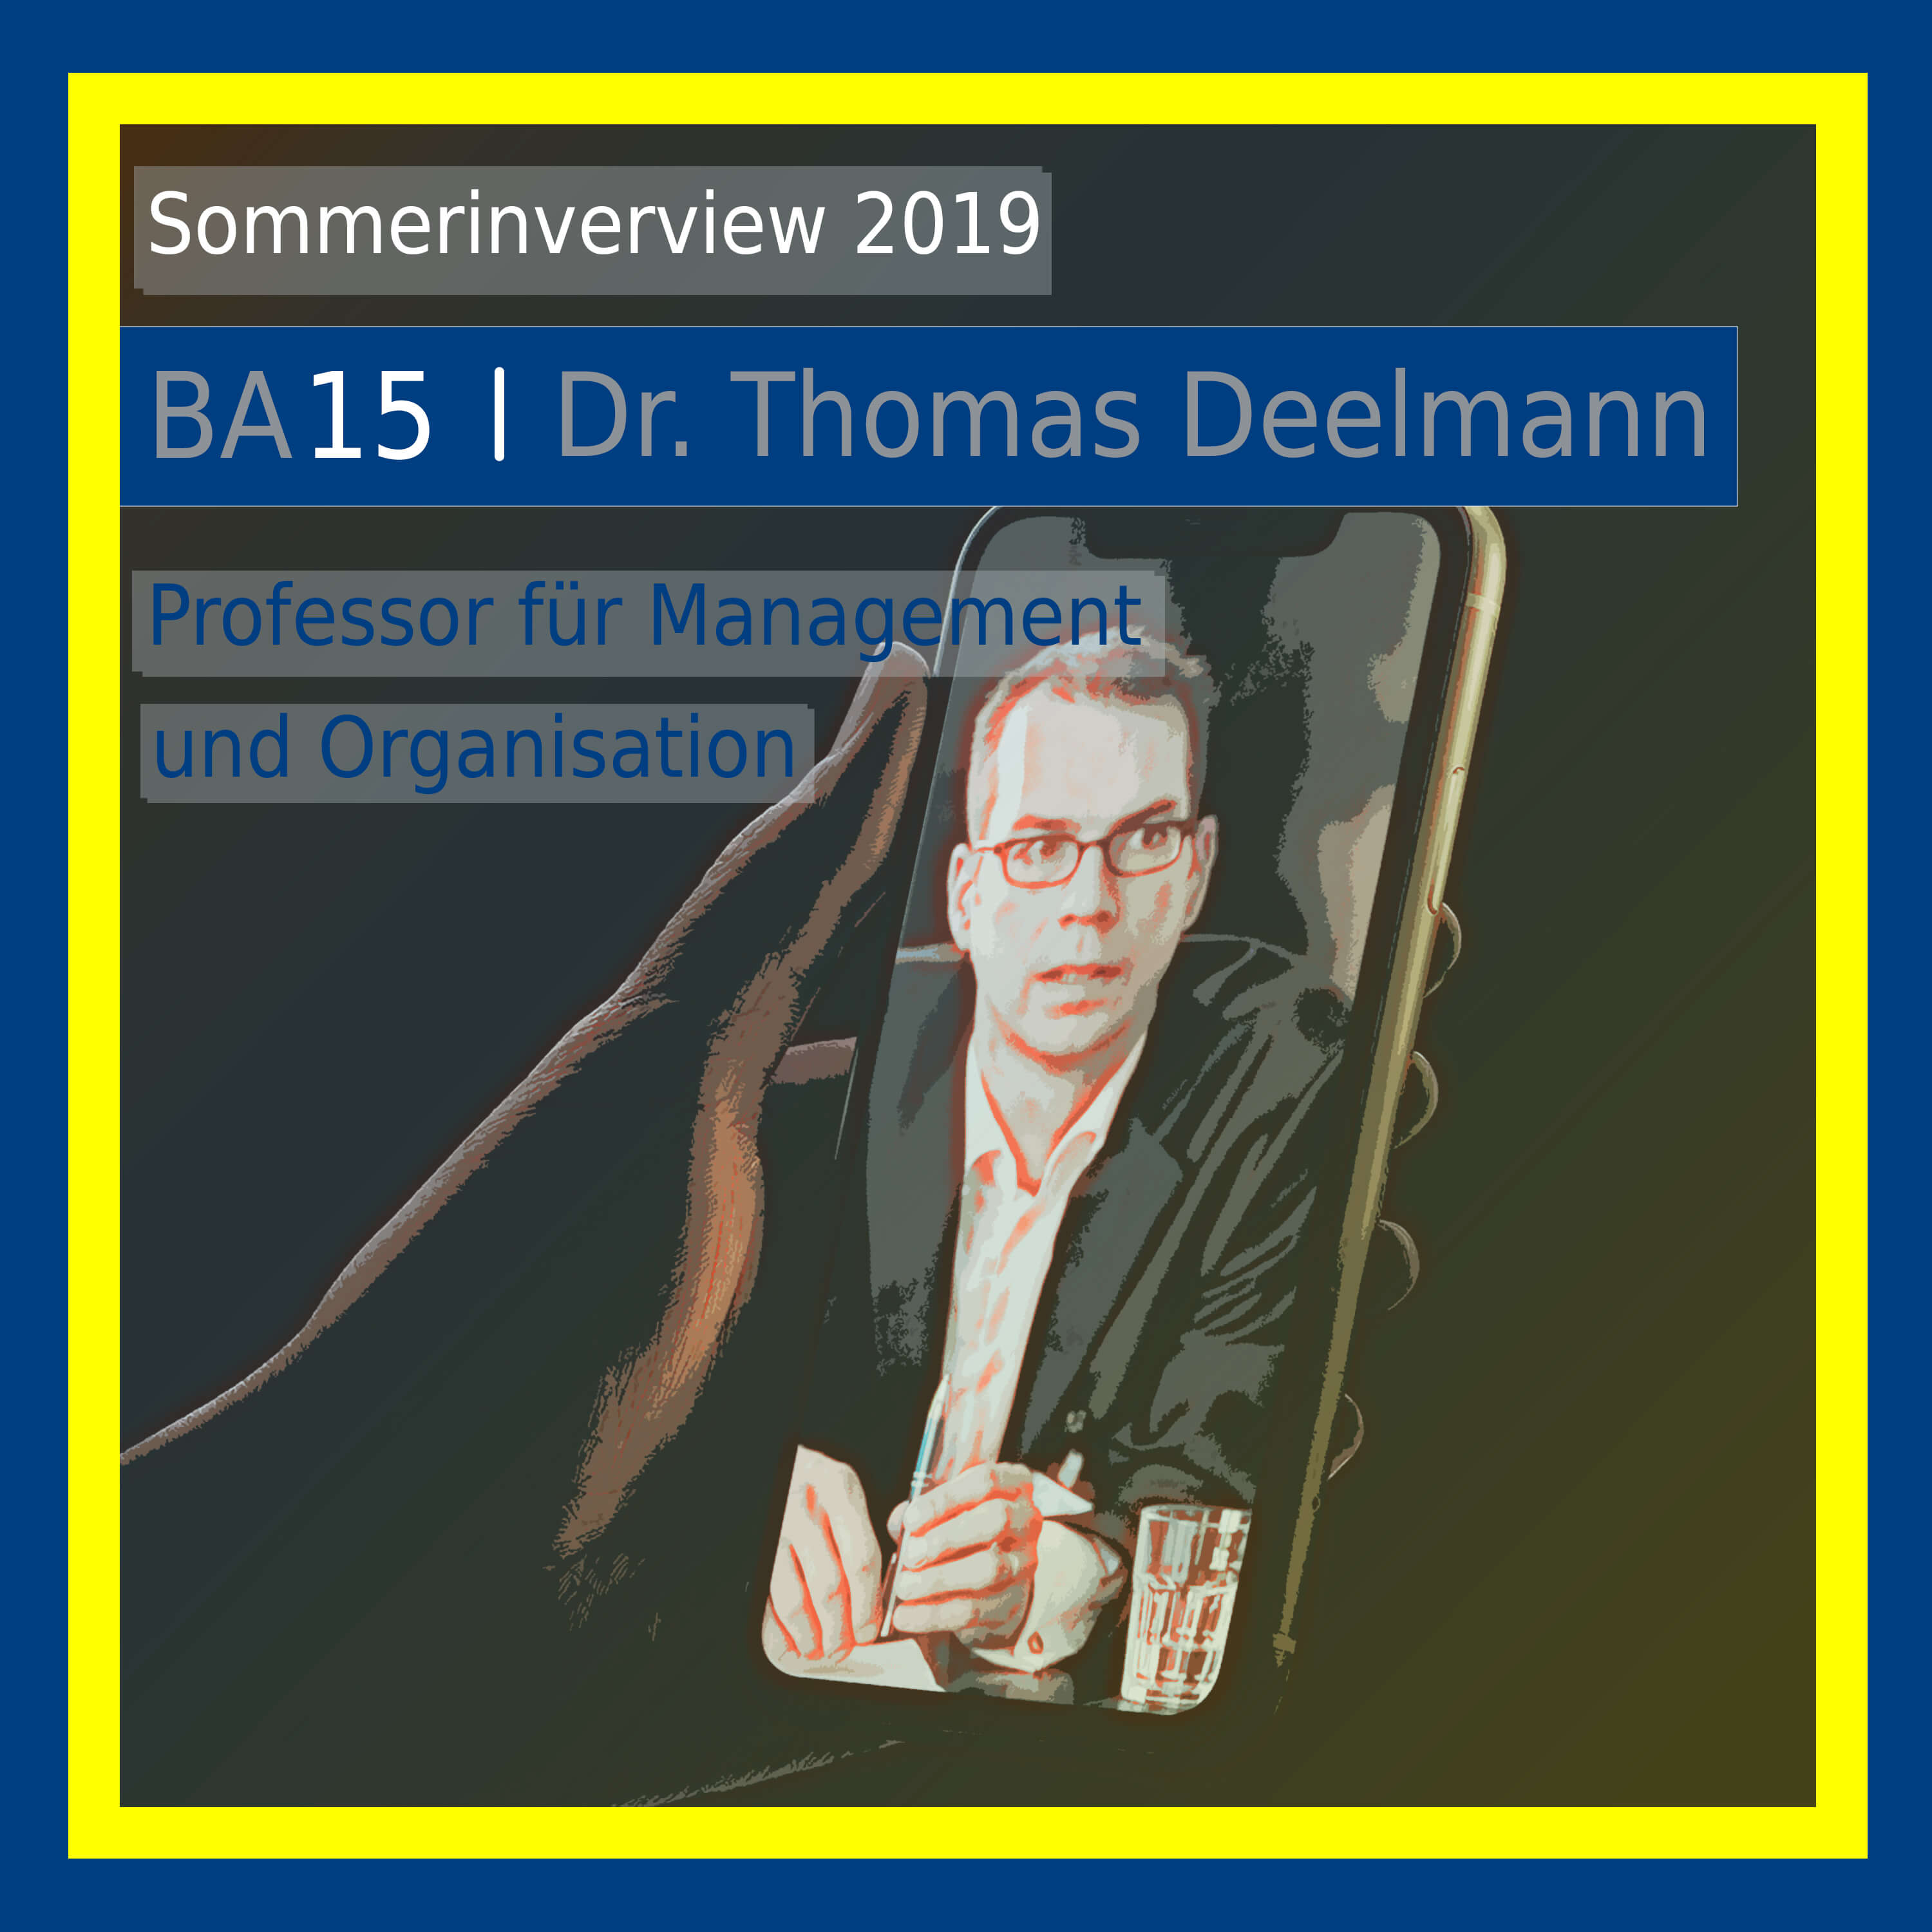 BA15 Deelmann Sommerinterview